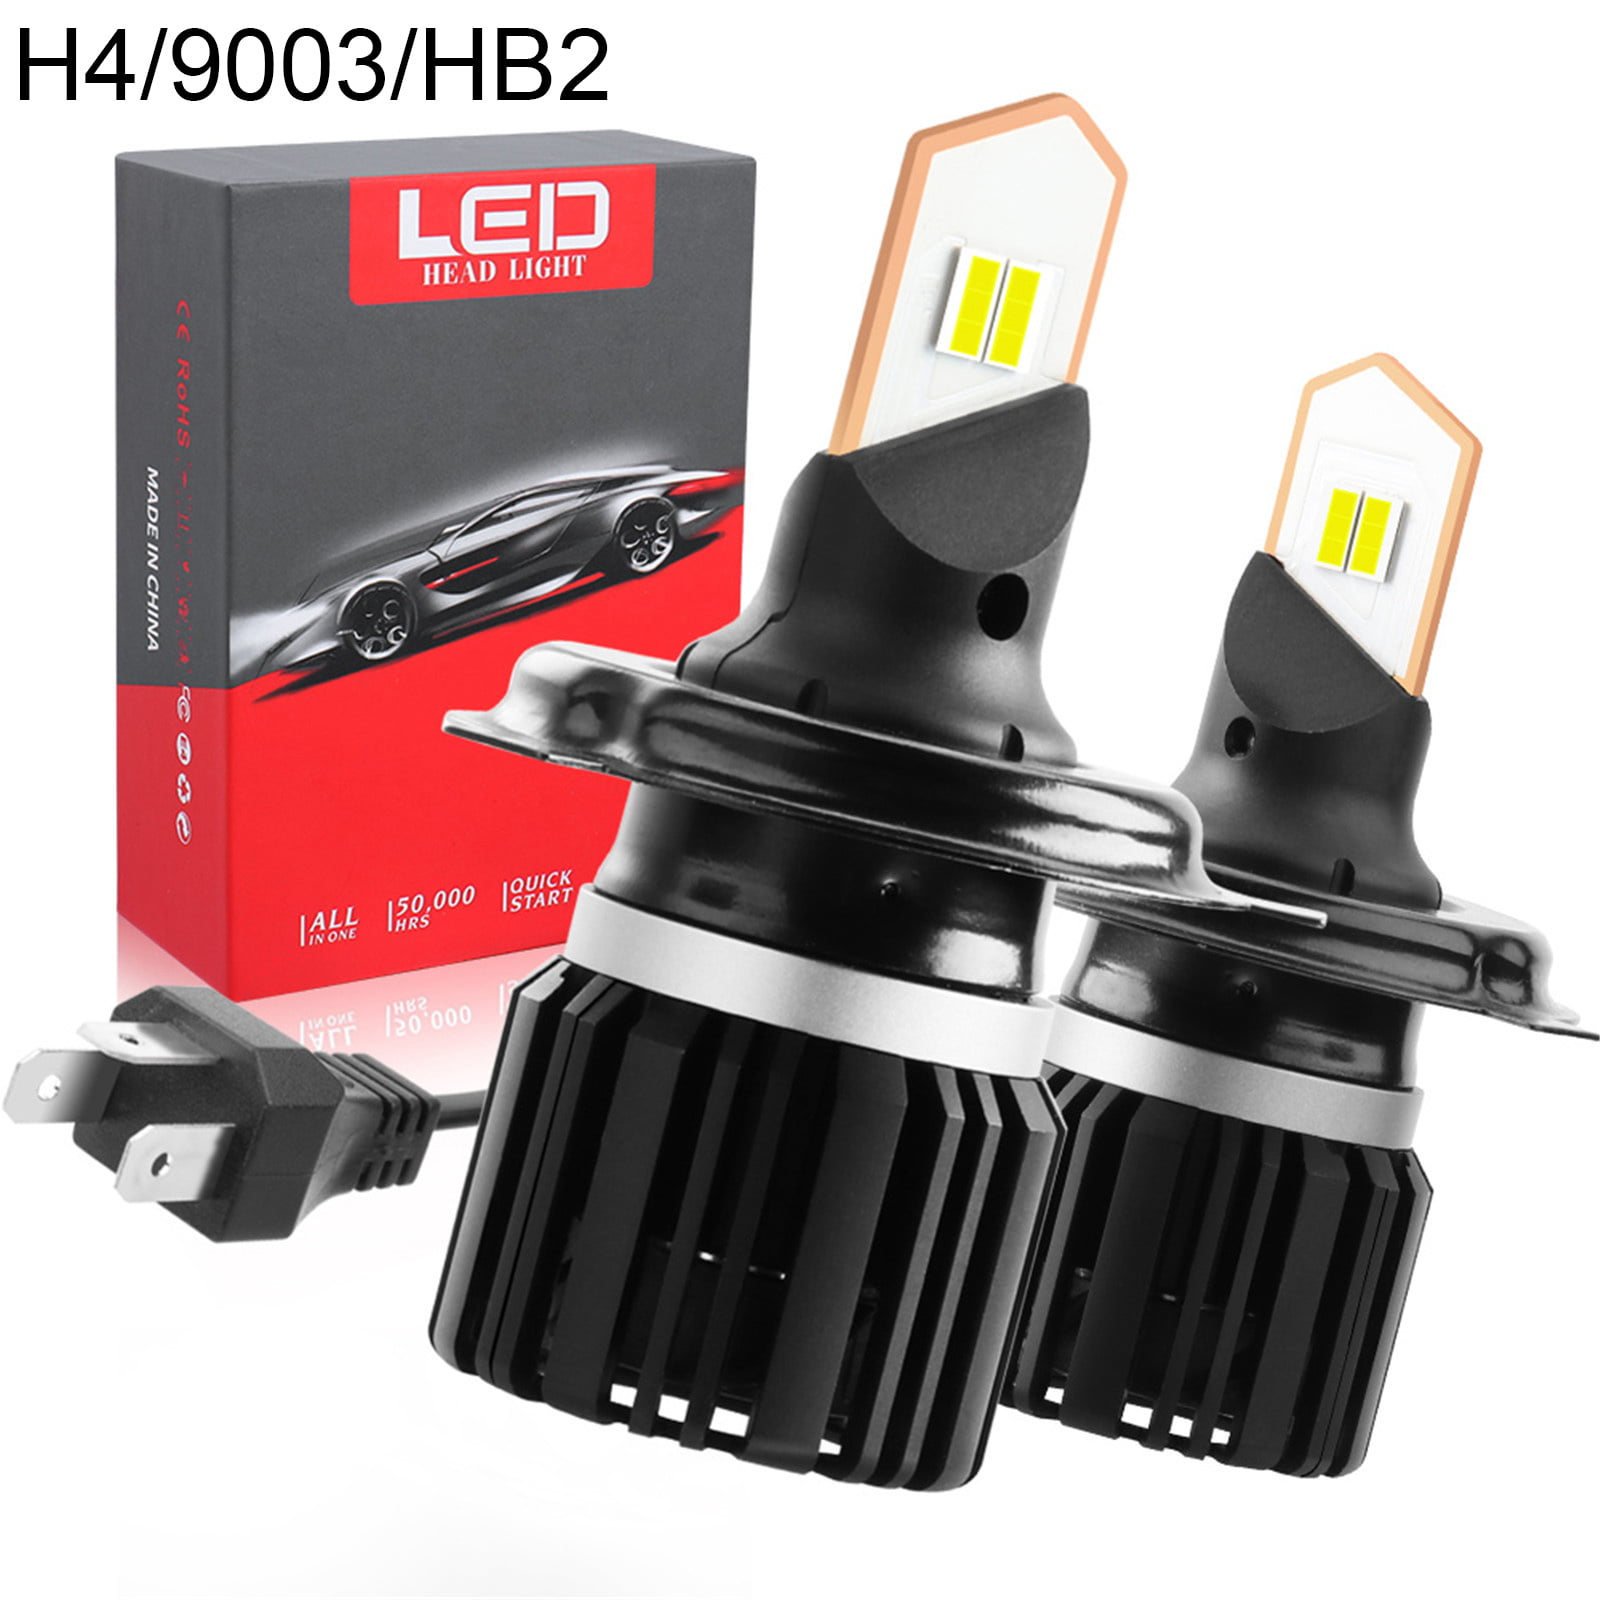 SEALIGHT H4 9003 HB2 LED Headlight Bulbs Fanless 6000K White High Low Beam CSP Chips Halogen Headlight Replacement 30W 5000Lumens 